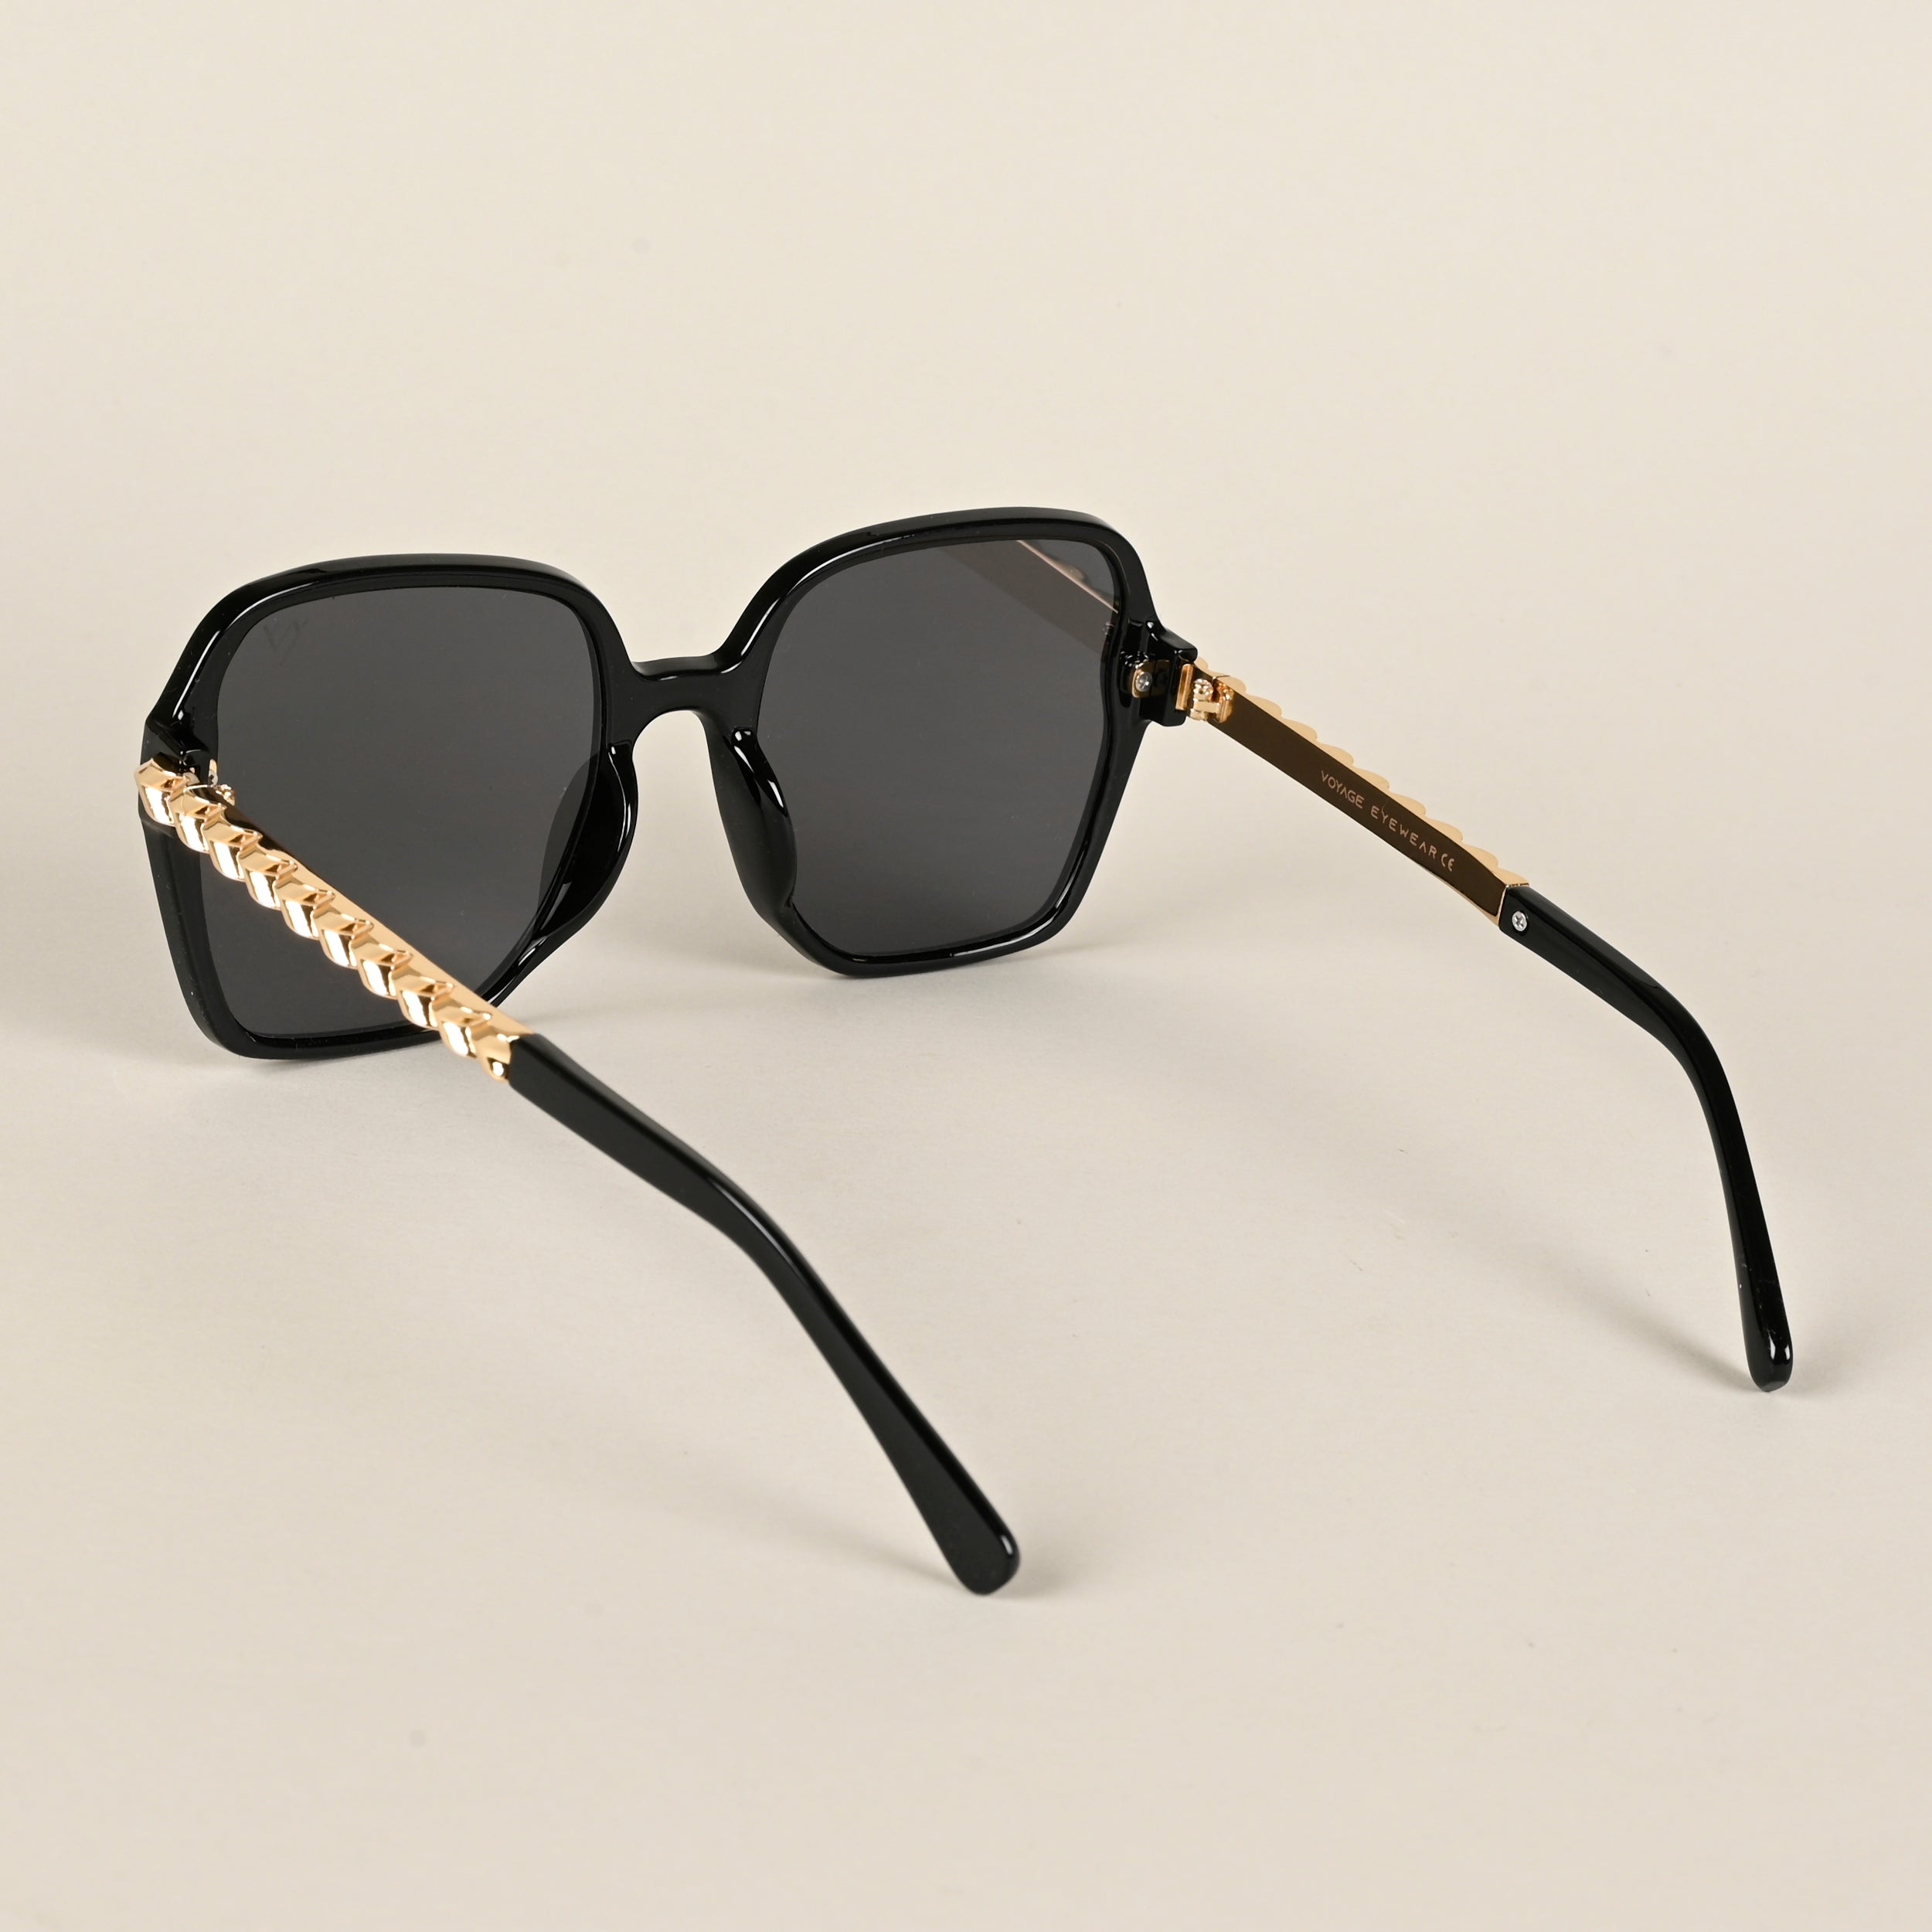 Voyage Black Square Sunglasses for Men & Women - MG4194